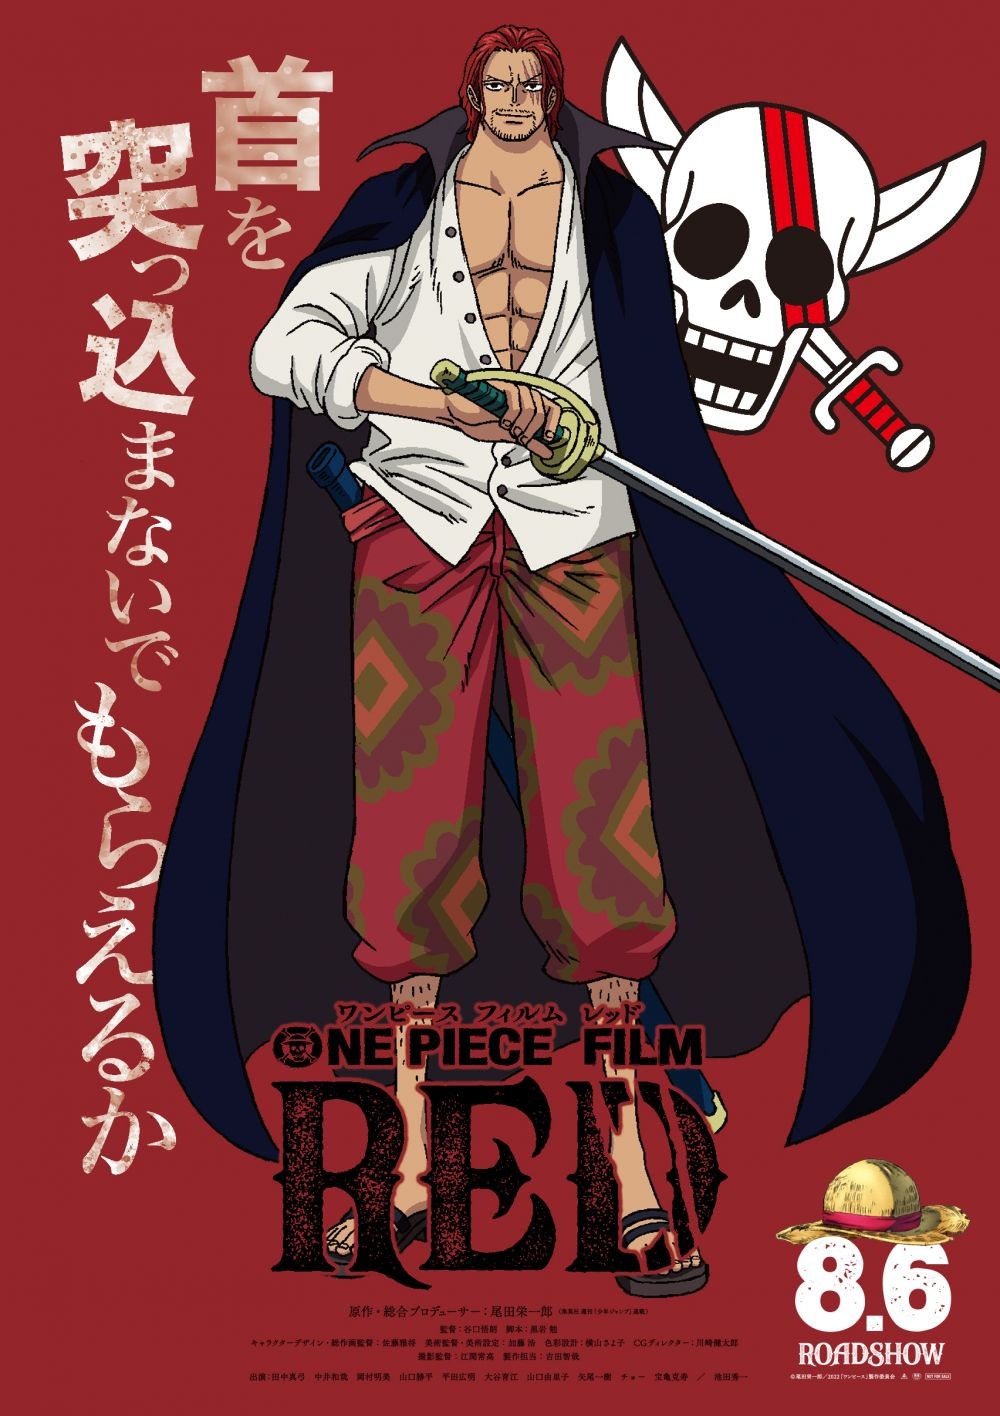 4 Petunjuk Kemampuan Berpedang Mihawk Melampaui Shanks di One Piece